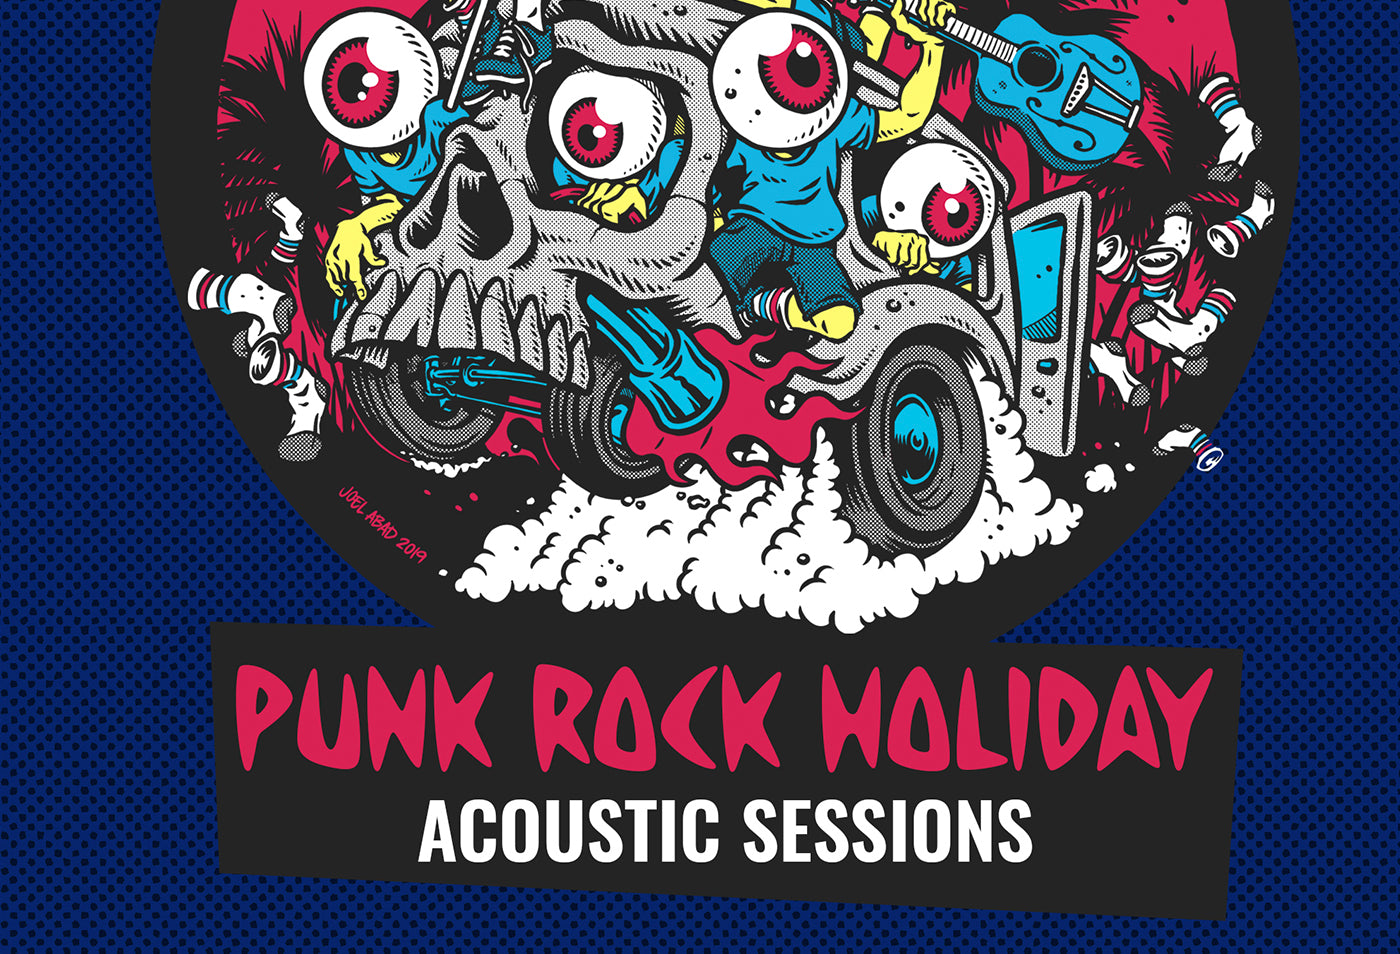 Punk Rock Holiday 2019 Acoustics